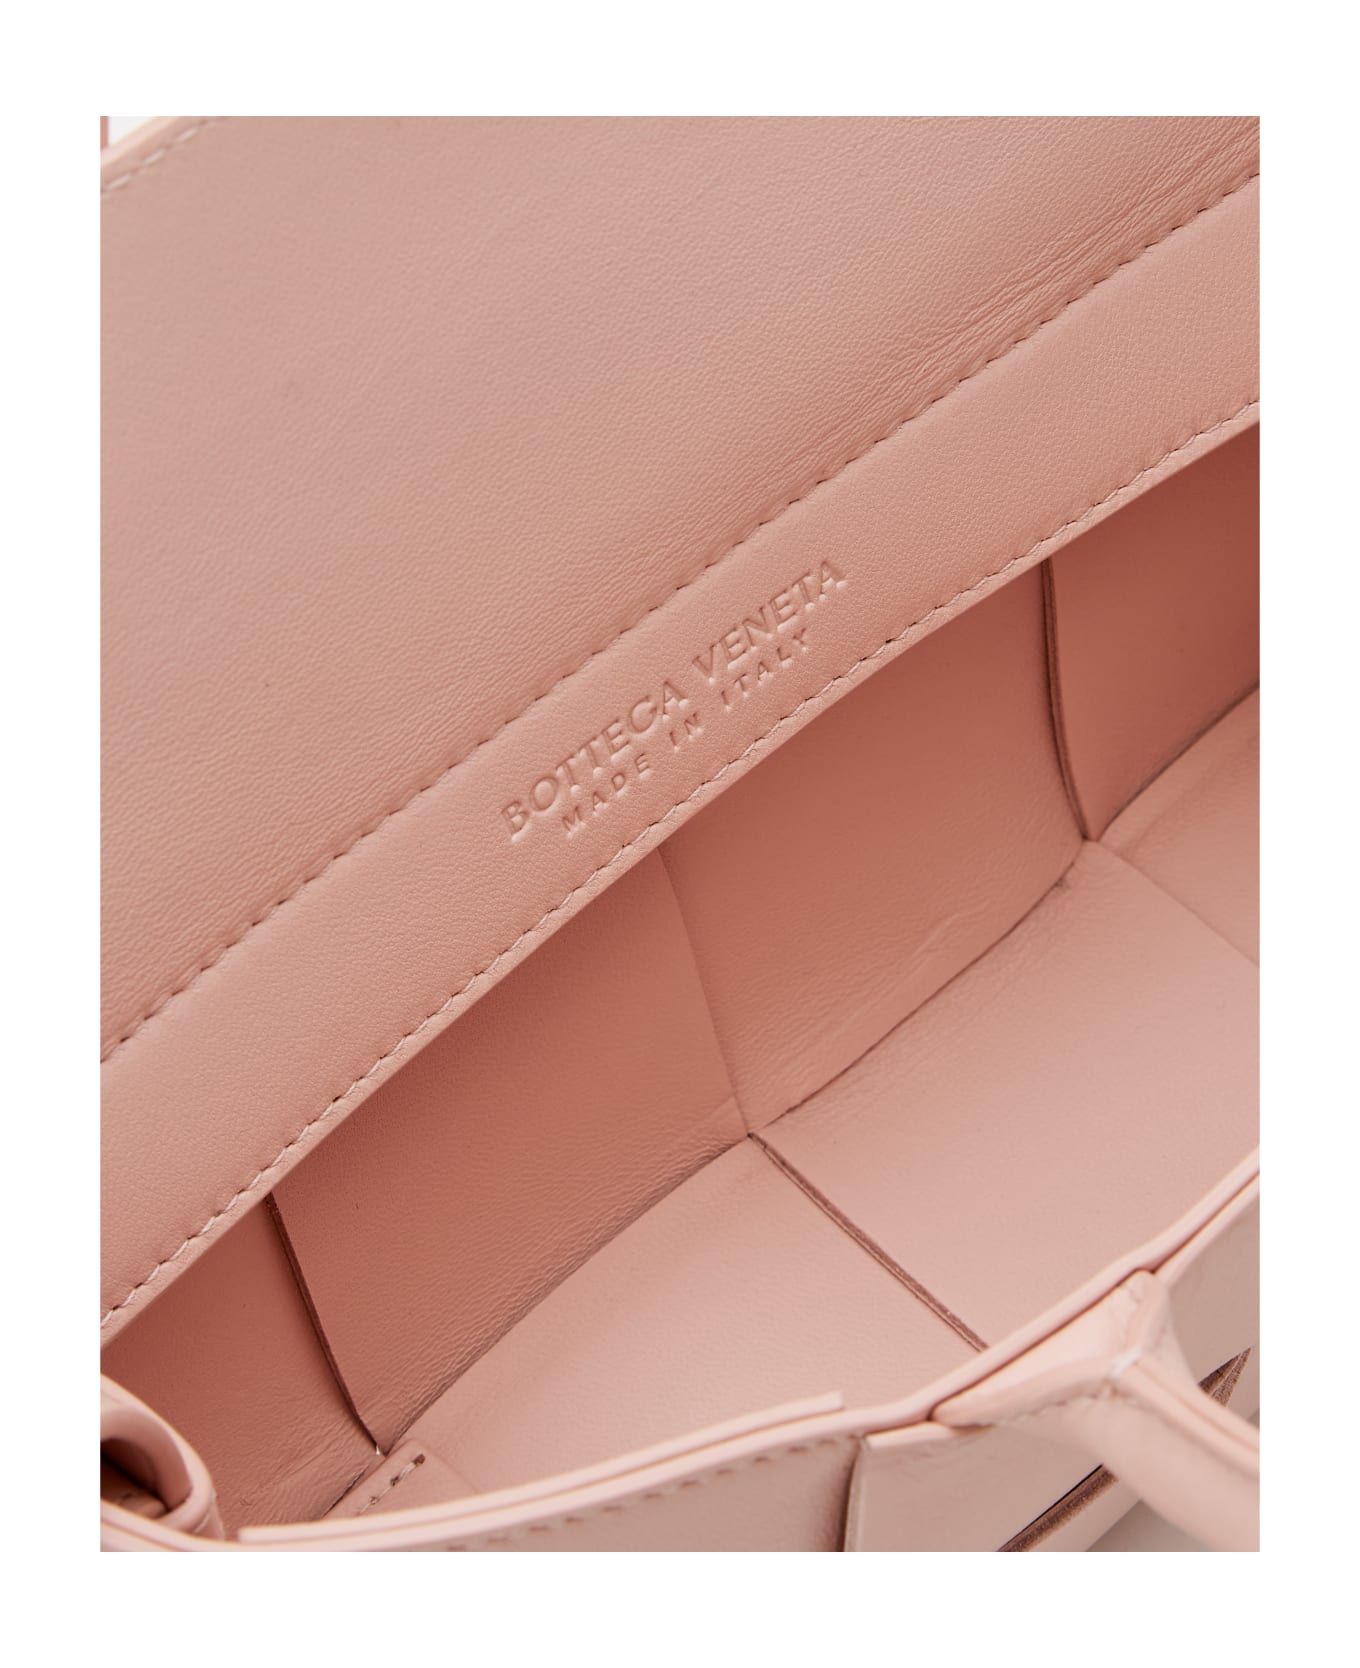 Bottega Veneta East West Mini Arco Leather Tote Bag - Pink